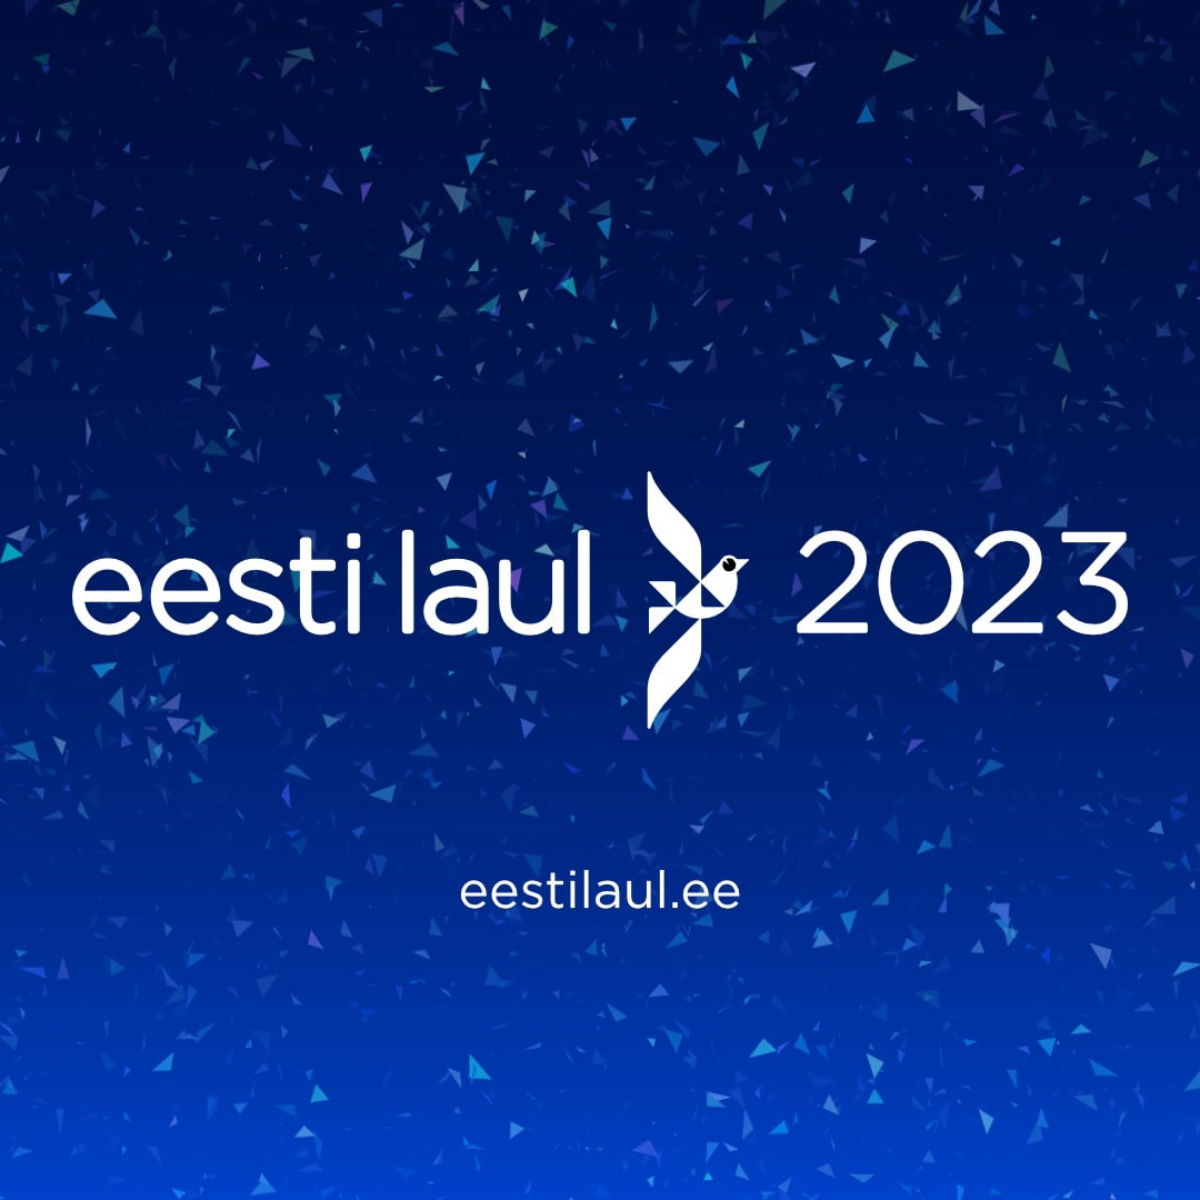 Estonia 🇪🇪 in the Eurovision Song Contest Eesti Laul 2023 cover artwork